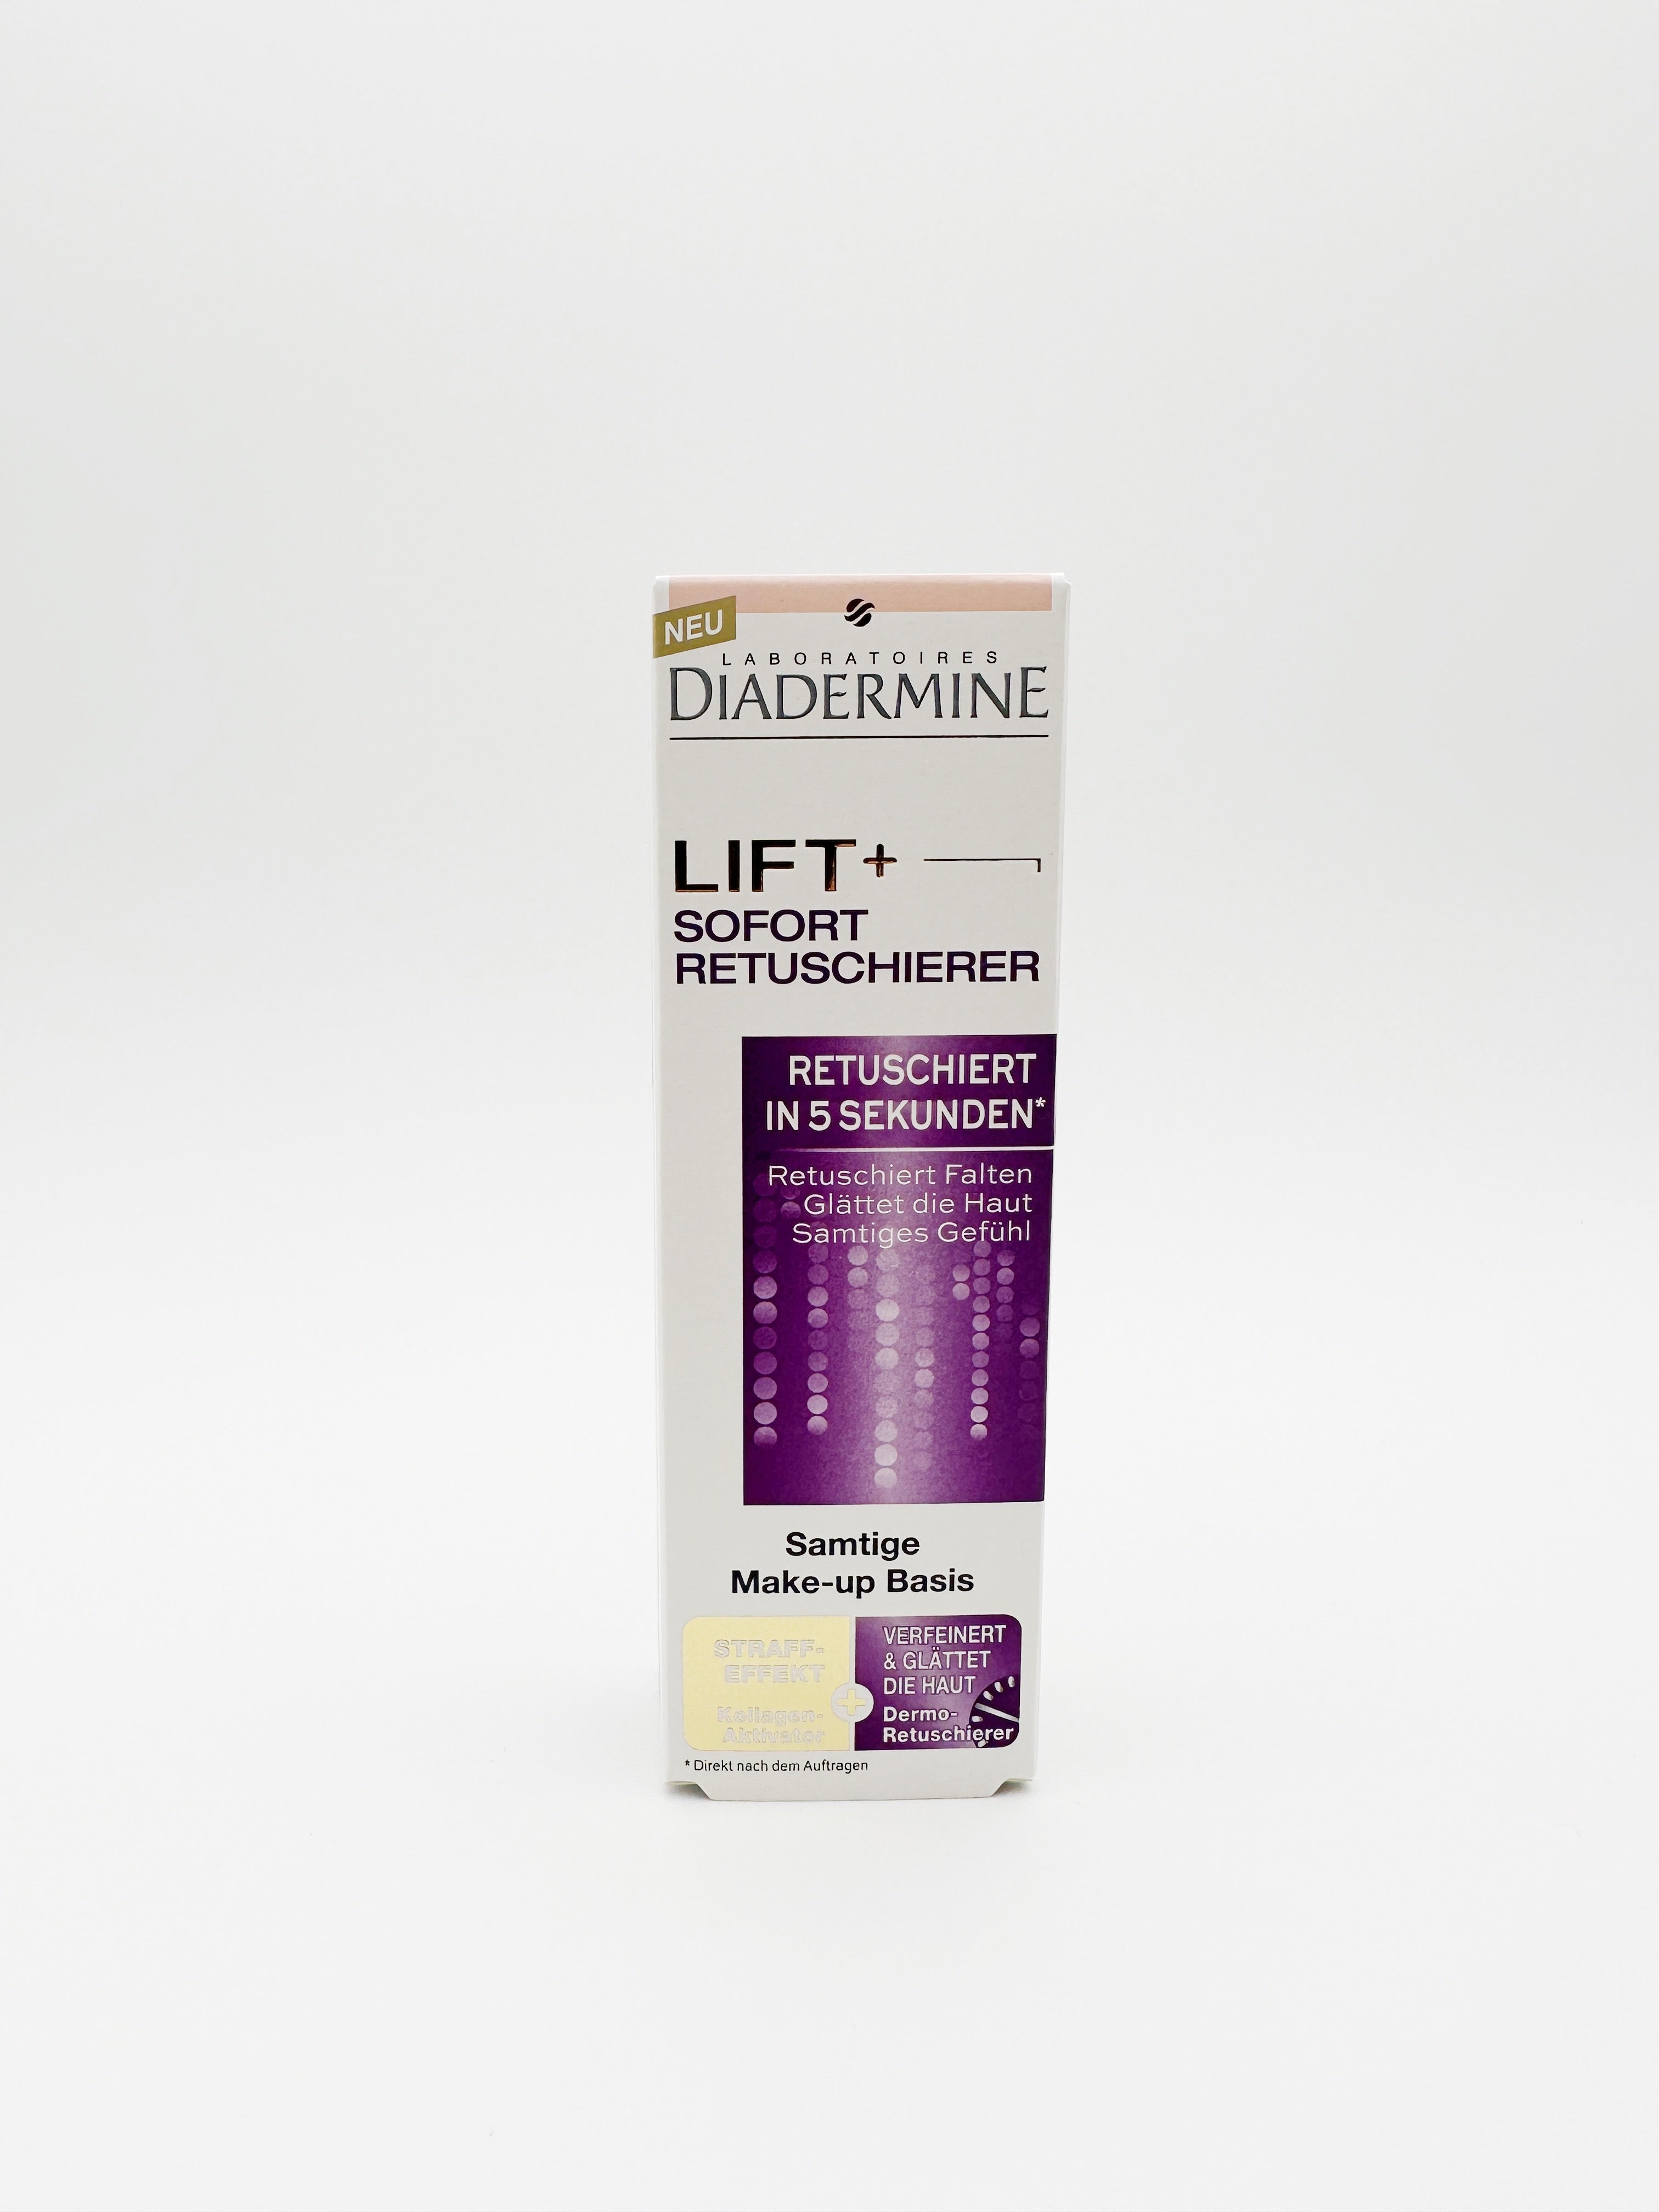 Diadermine Lift+ Sofort Retuschierer 30ml